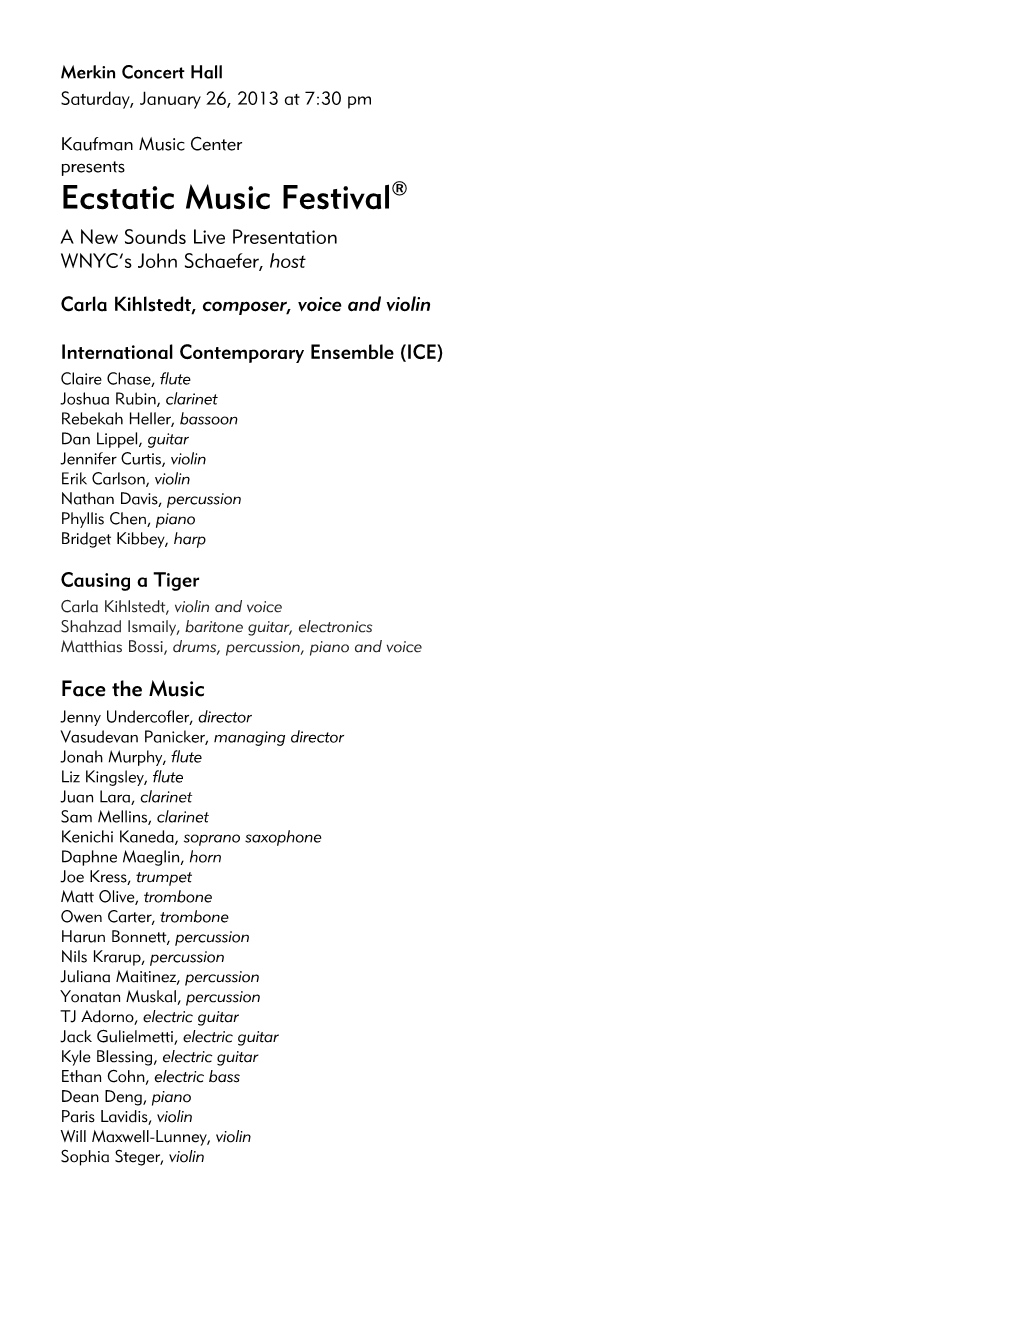 Ecstatic Music Festival® a New Sounds Live Presentation WNYC’S John Schaefer, Host